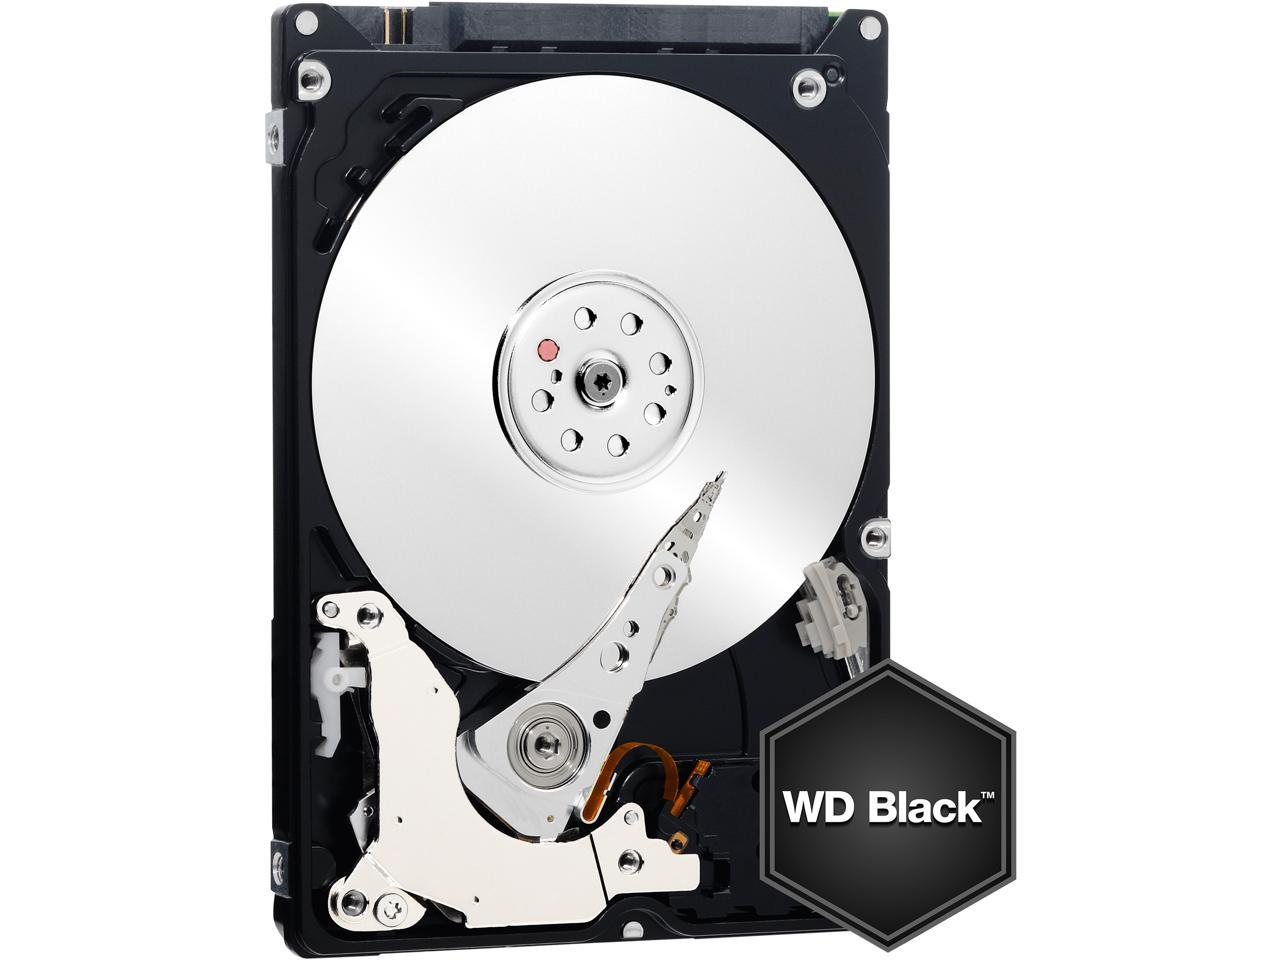 WD BLACK SERIES WD1600BEKX 160GB 7200 RPM 16MB Cache SATA 6.0Gb/s 2.5" Internal Notebook Hard Drive Bare Drive